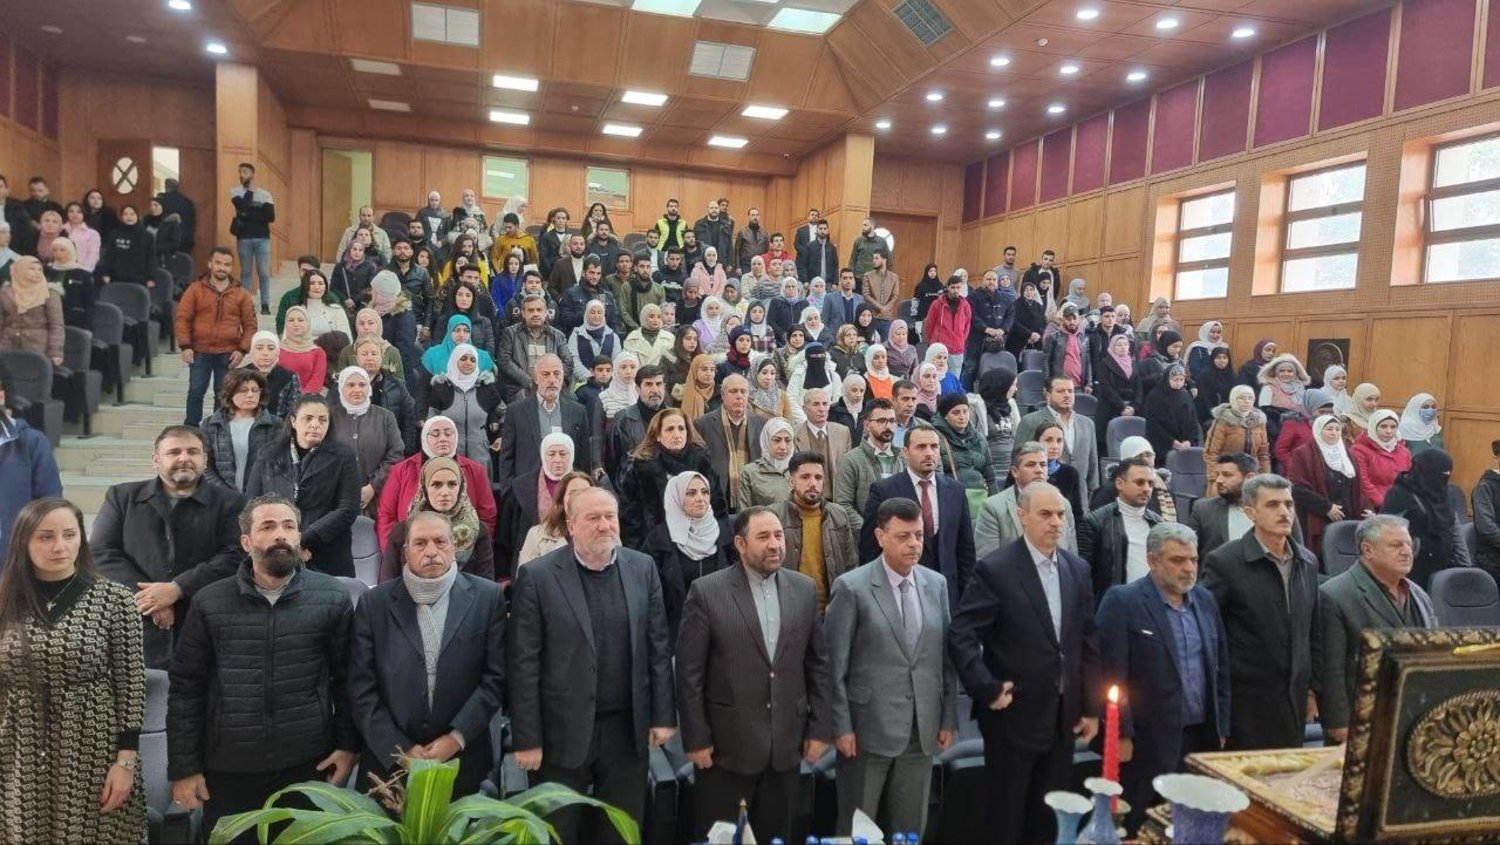 General photo of the Iranian celebration at Damascus University (Faculty of Arts, Damascus University Facebook page)